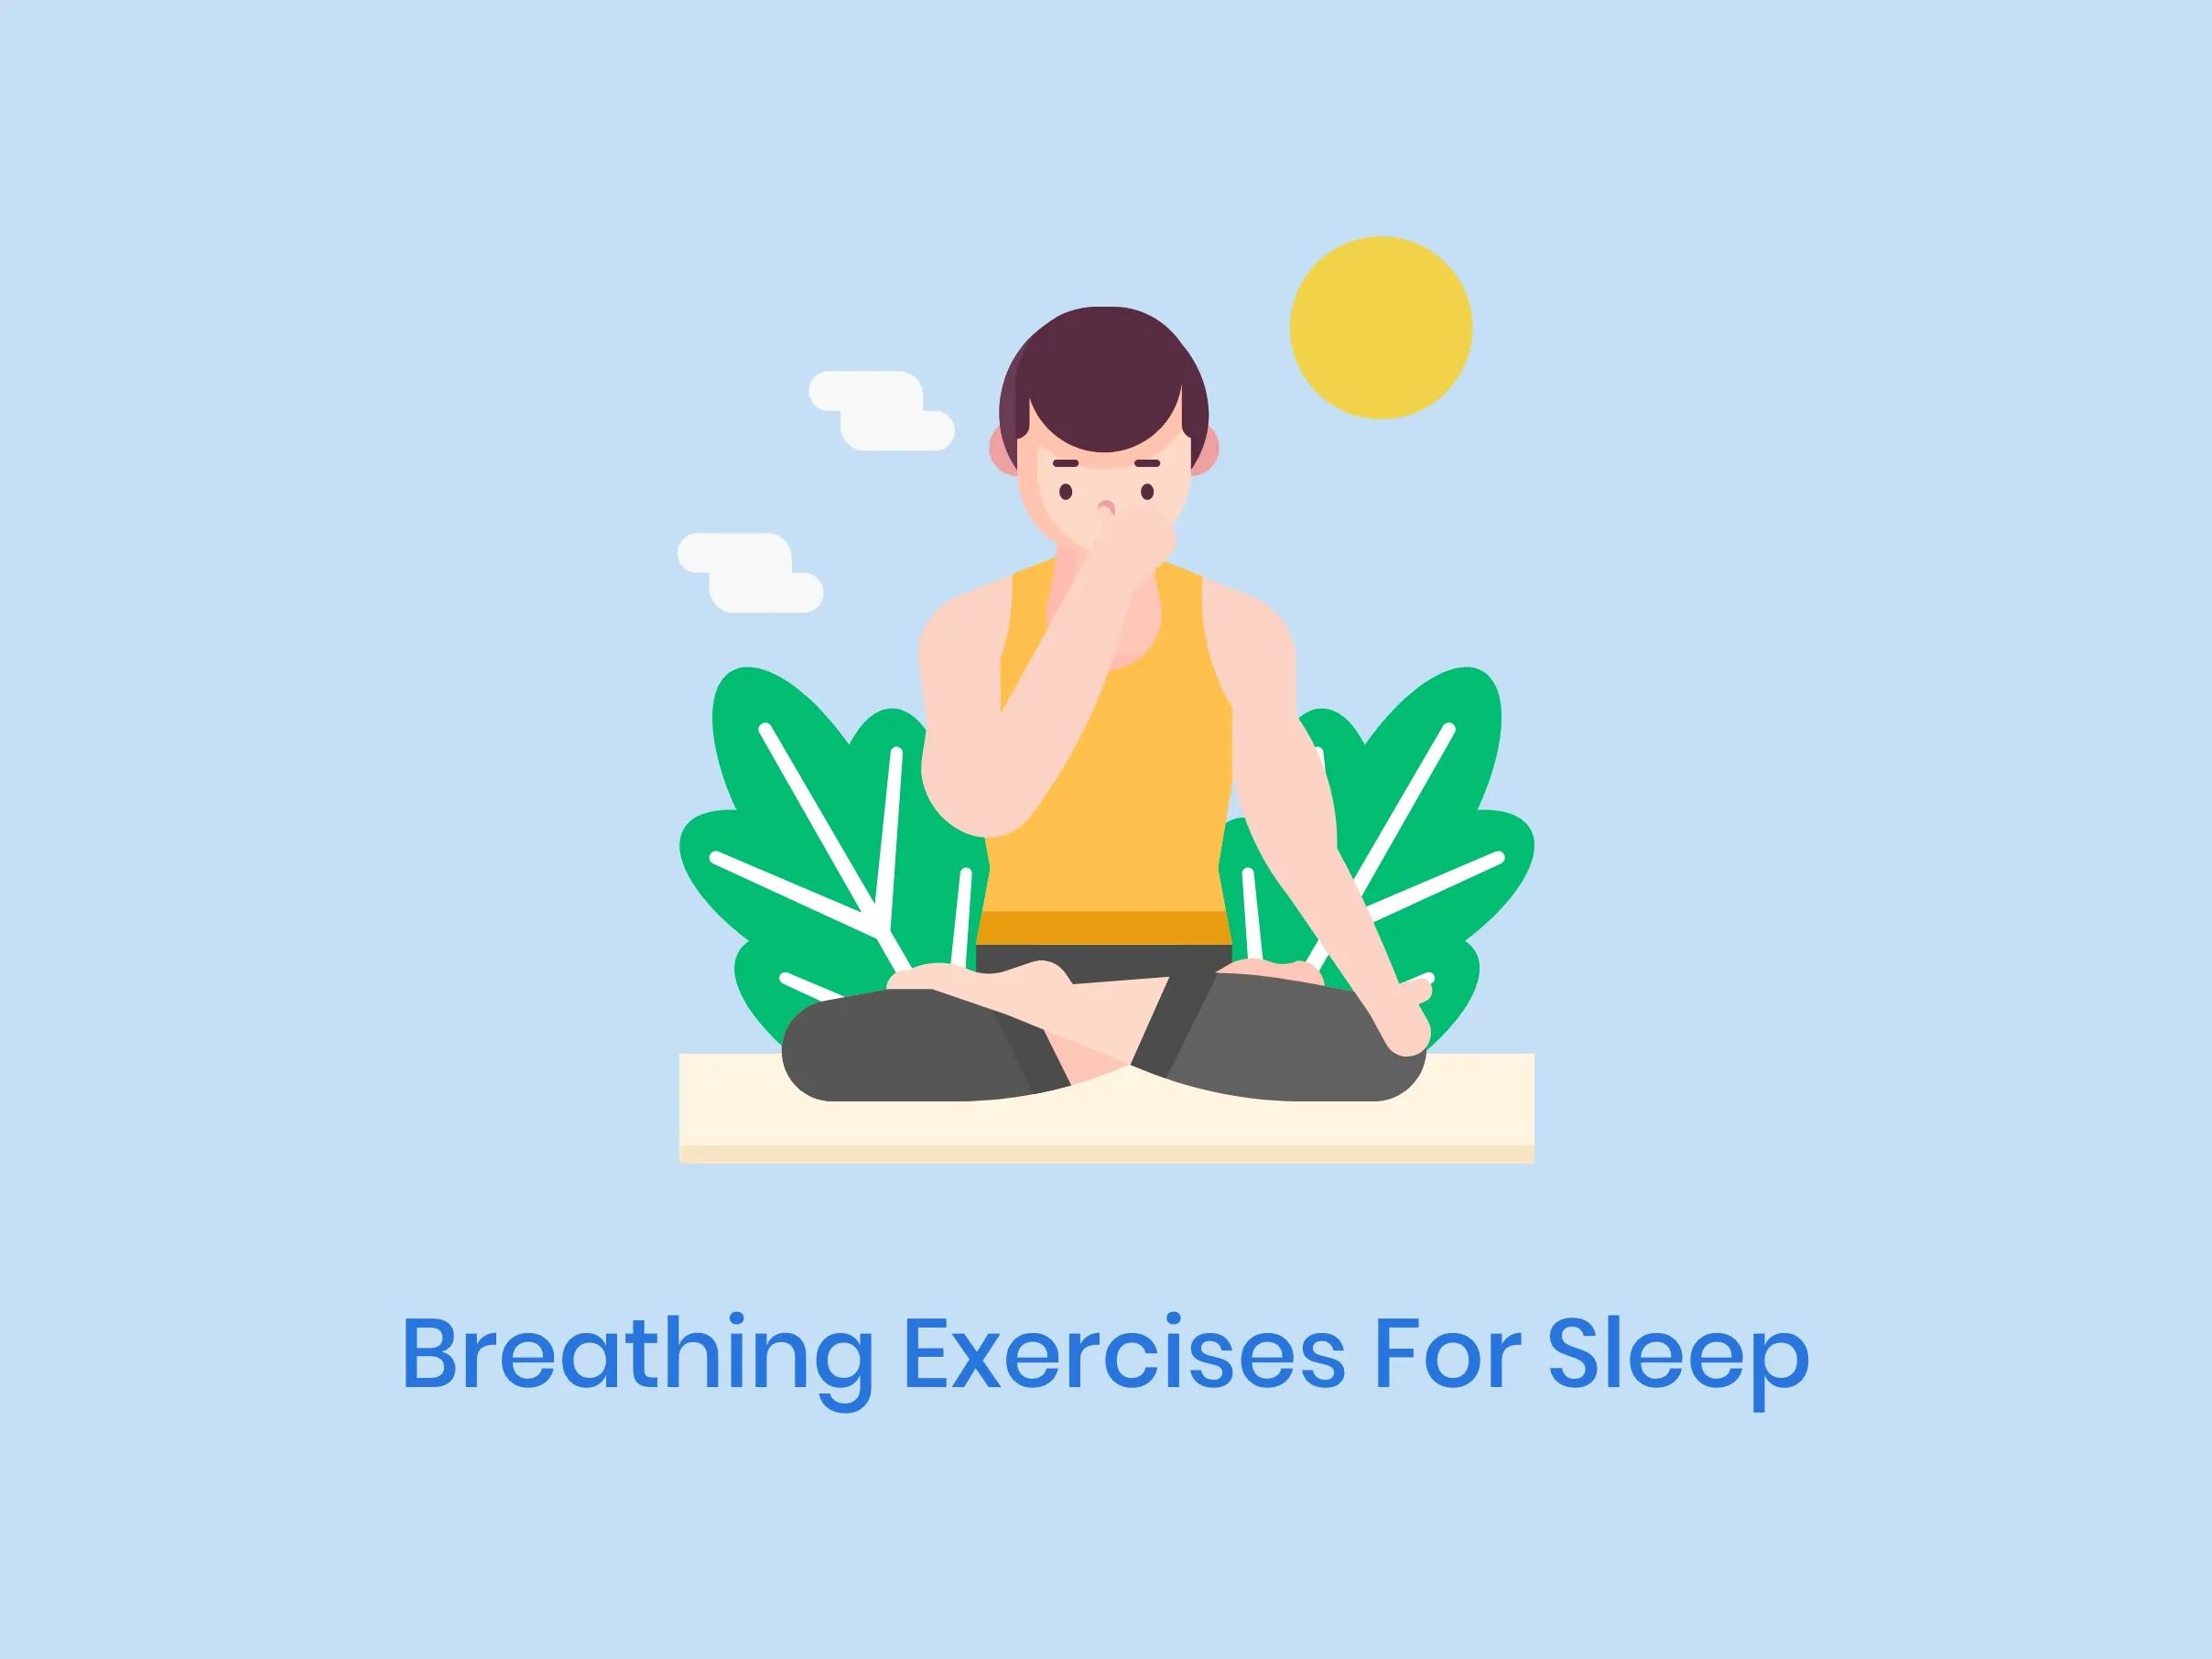 Illustration of Breathing exercises for sleep